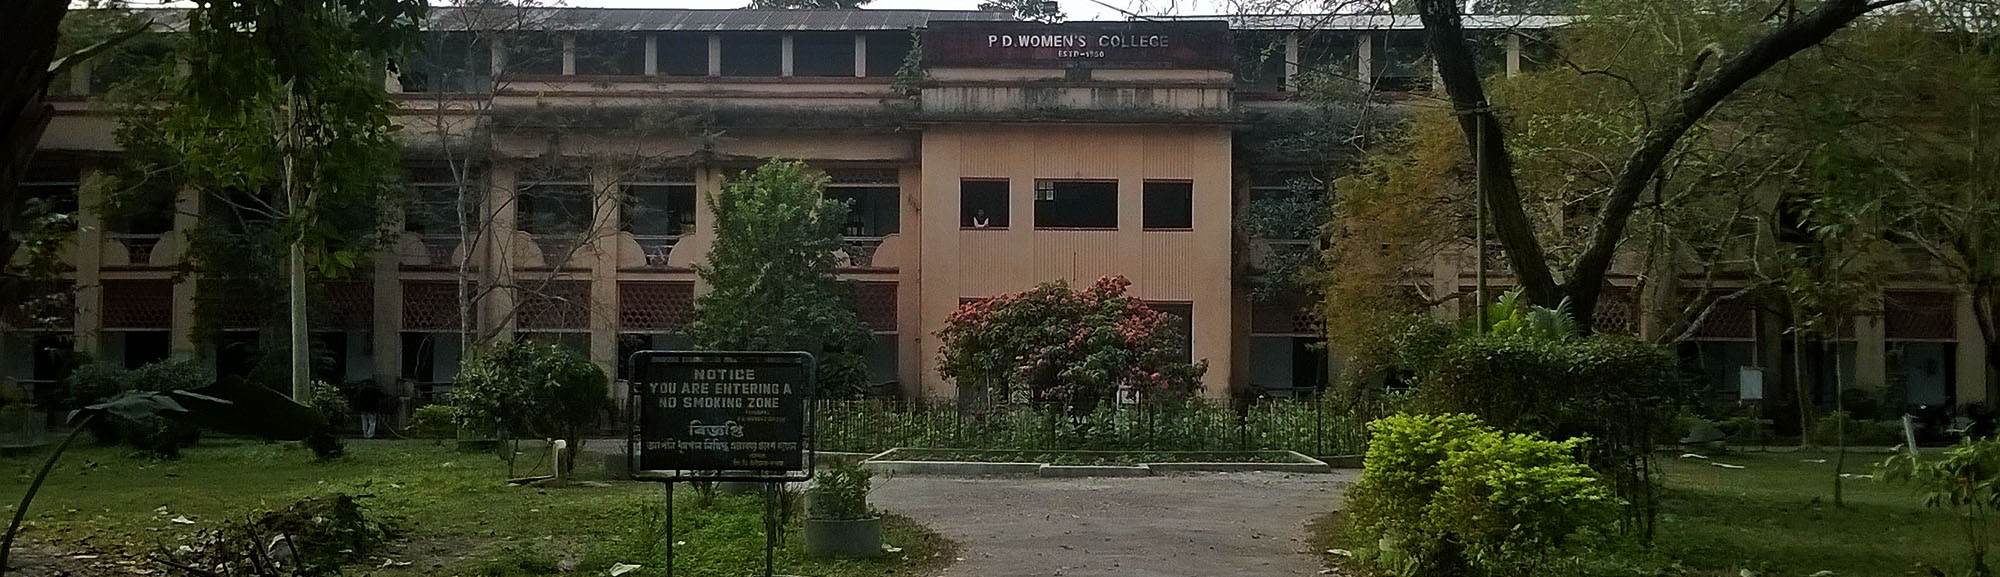 P.D. Women's College, Jalpaiguri